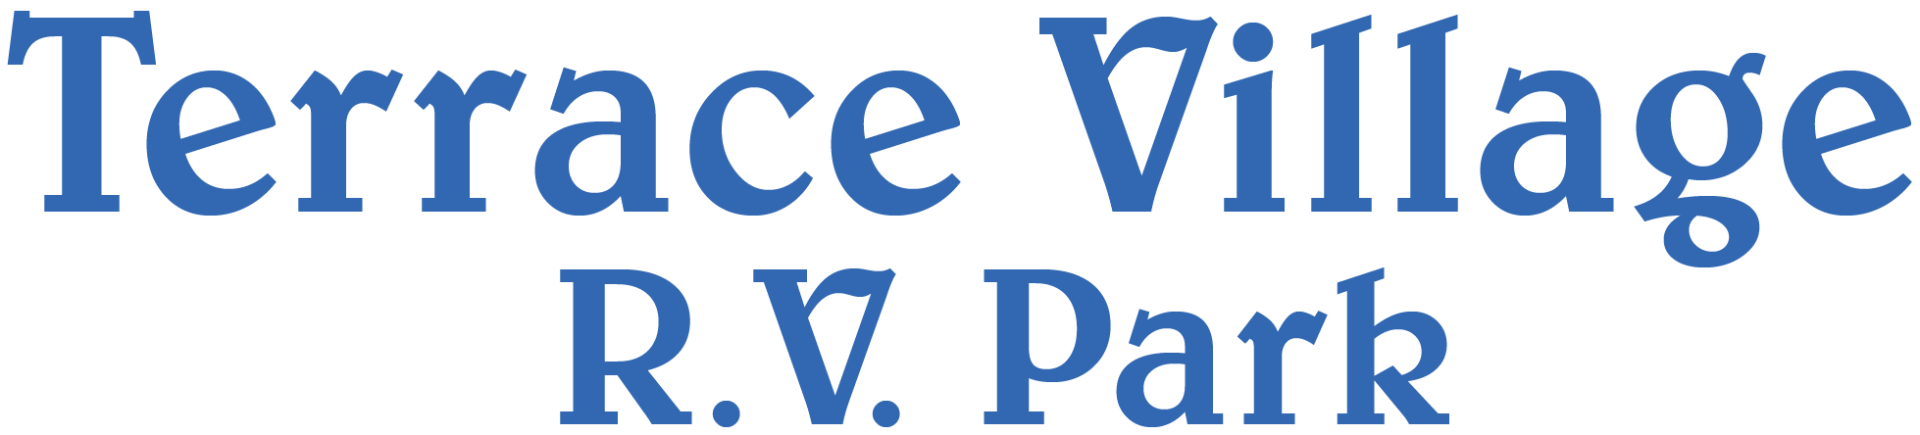 Terrace Village RV Park Logo